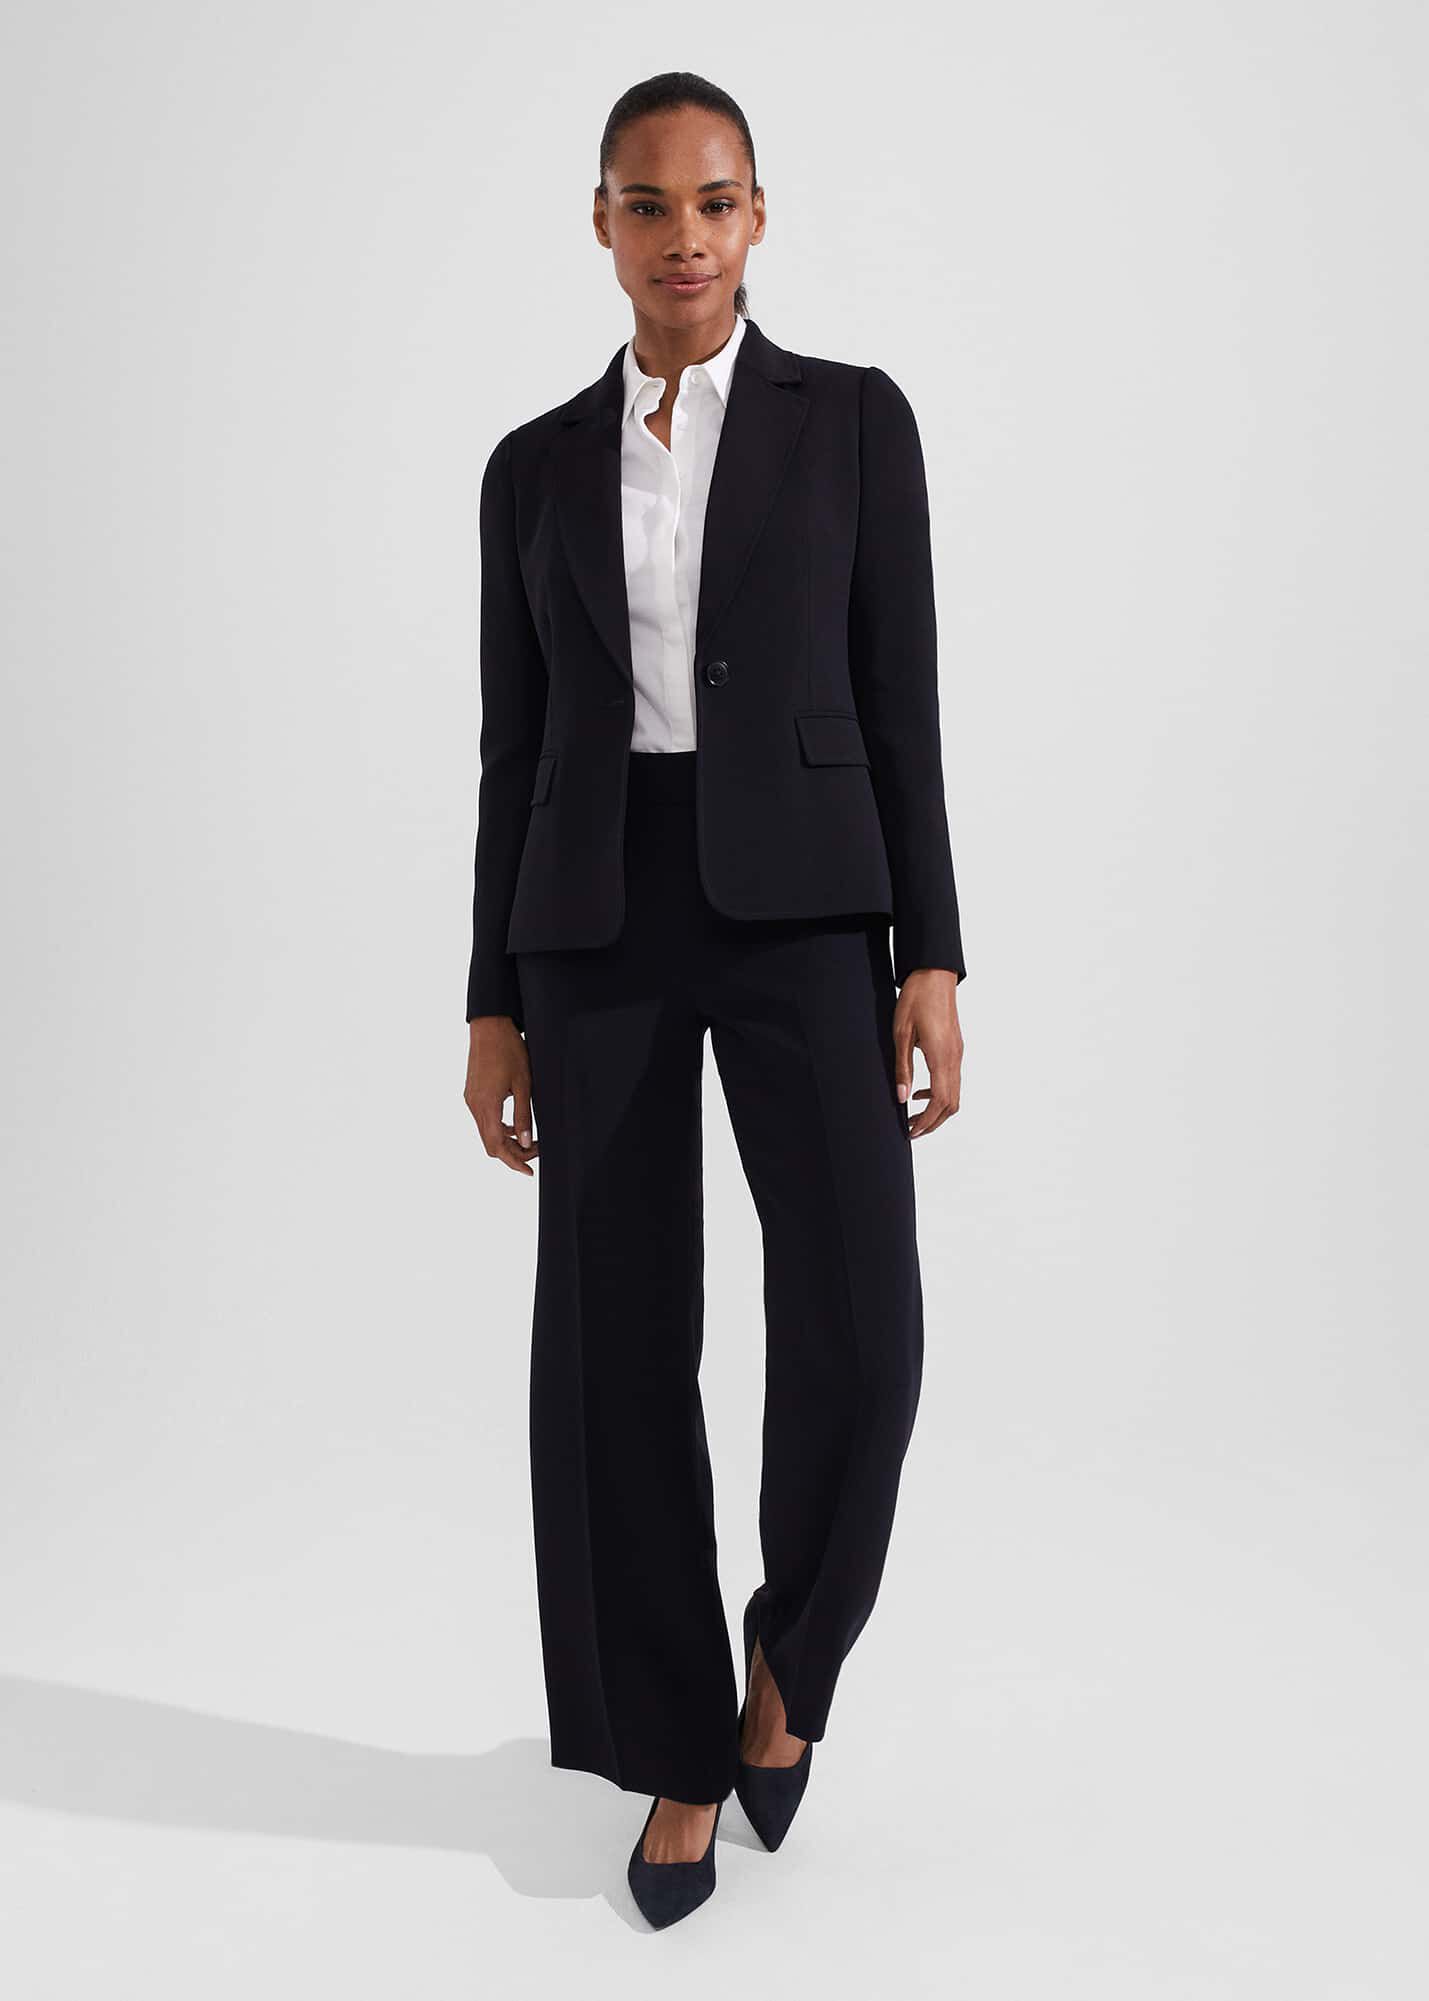 Women's Black Pants | Black Cargo & Tailored Pants - Reiss USA